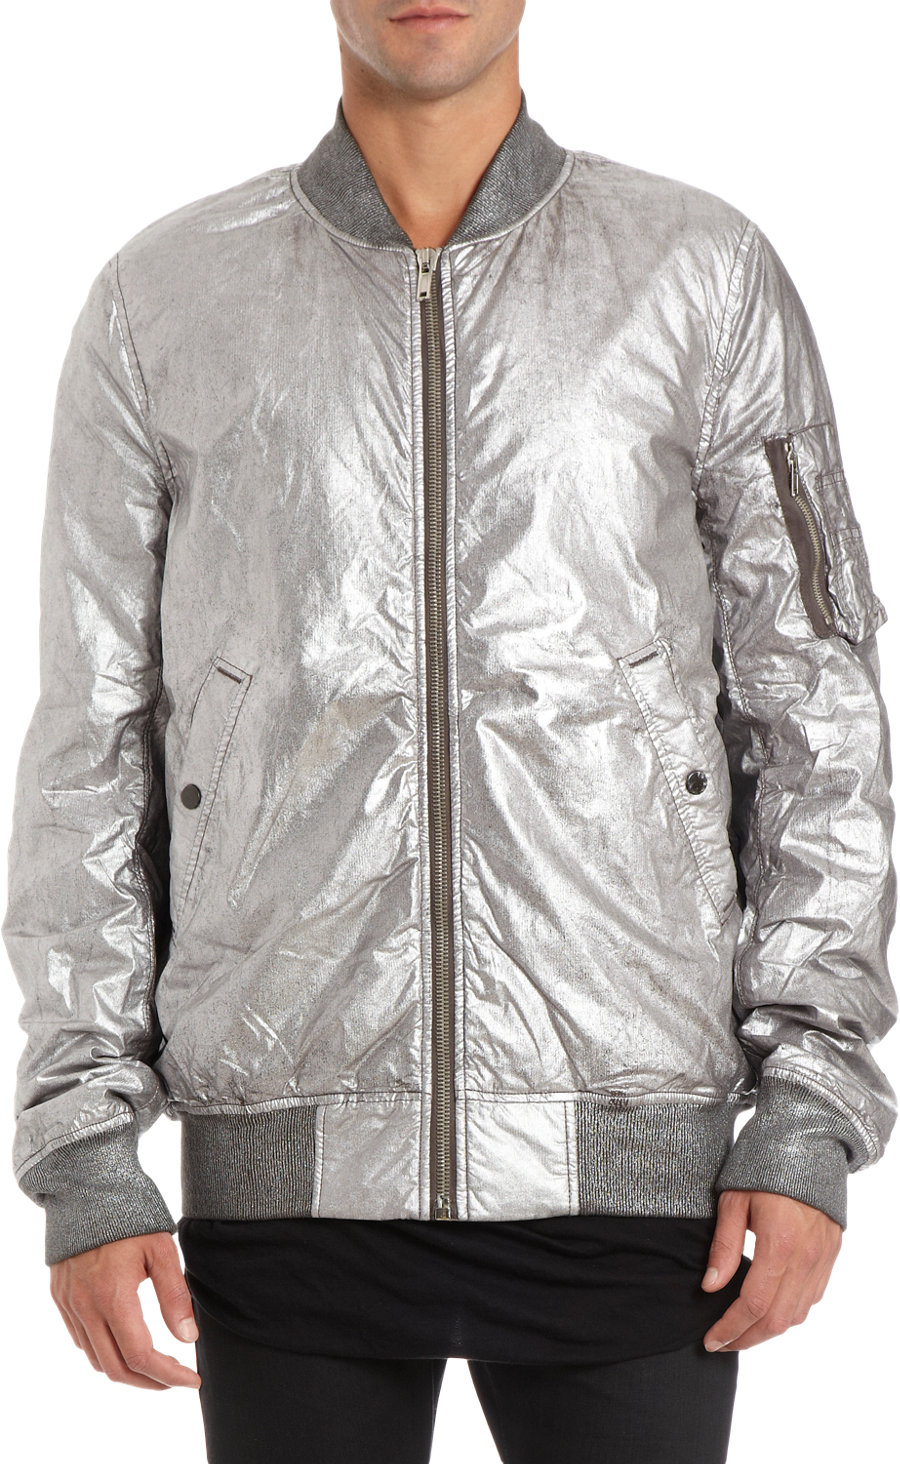 Lyst - Drkshdw By Rick Owens Bomber Jacket in Silver in Metallic for Men